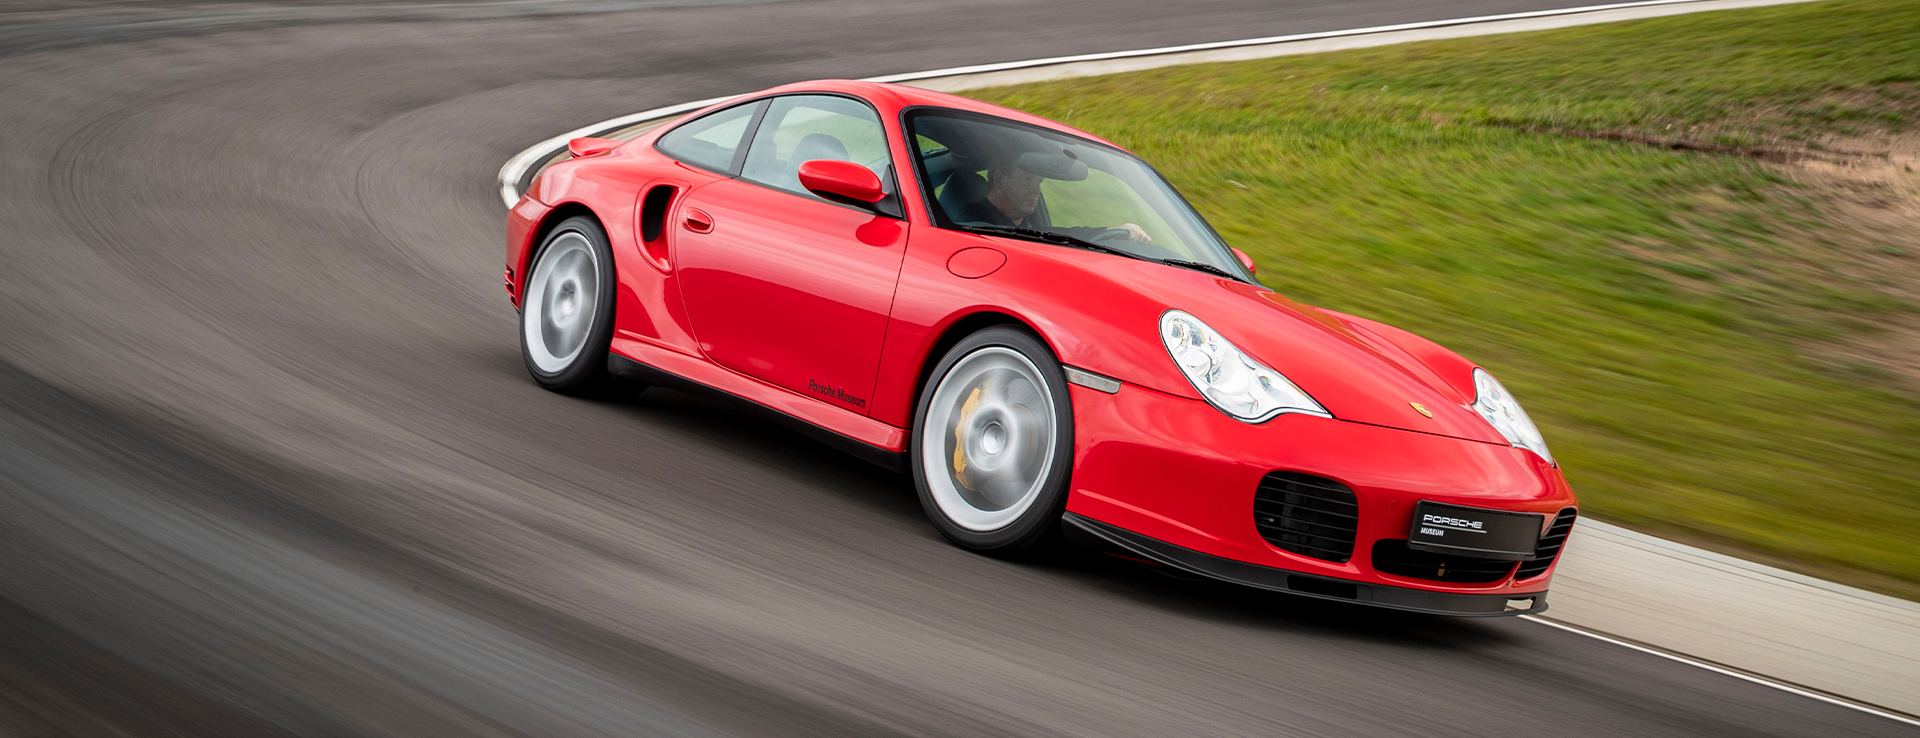 Red Porsche 911 Turbo speeding around bend of racetrack